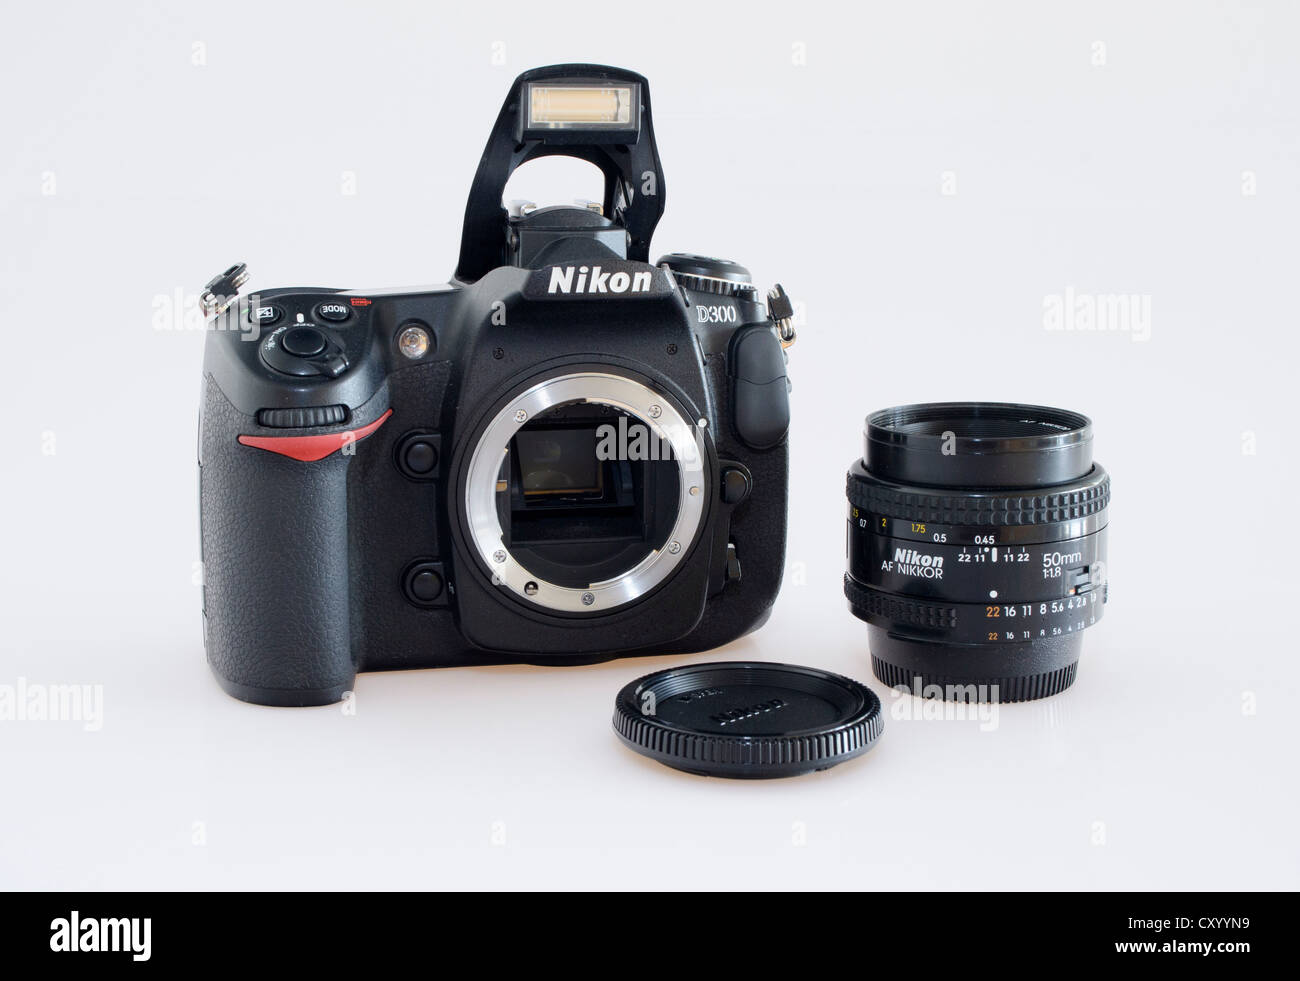 Nikon D300 digital SLR camera with a 50mm lens Stock Photo - Alamy